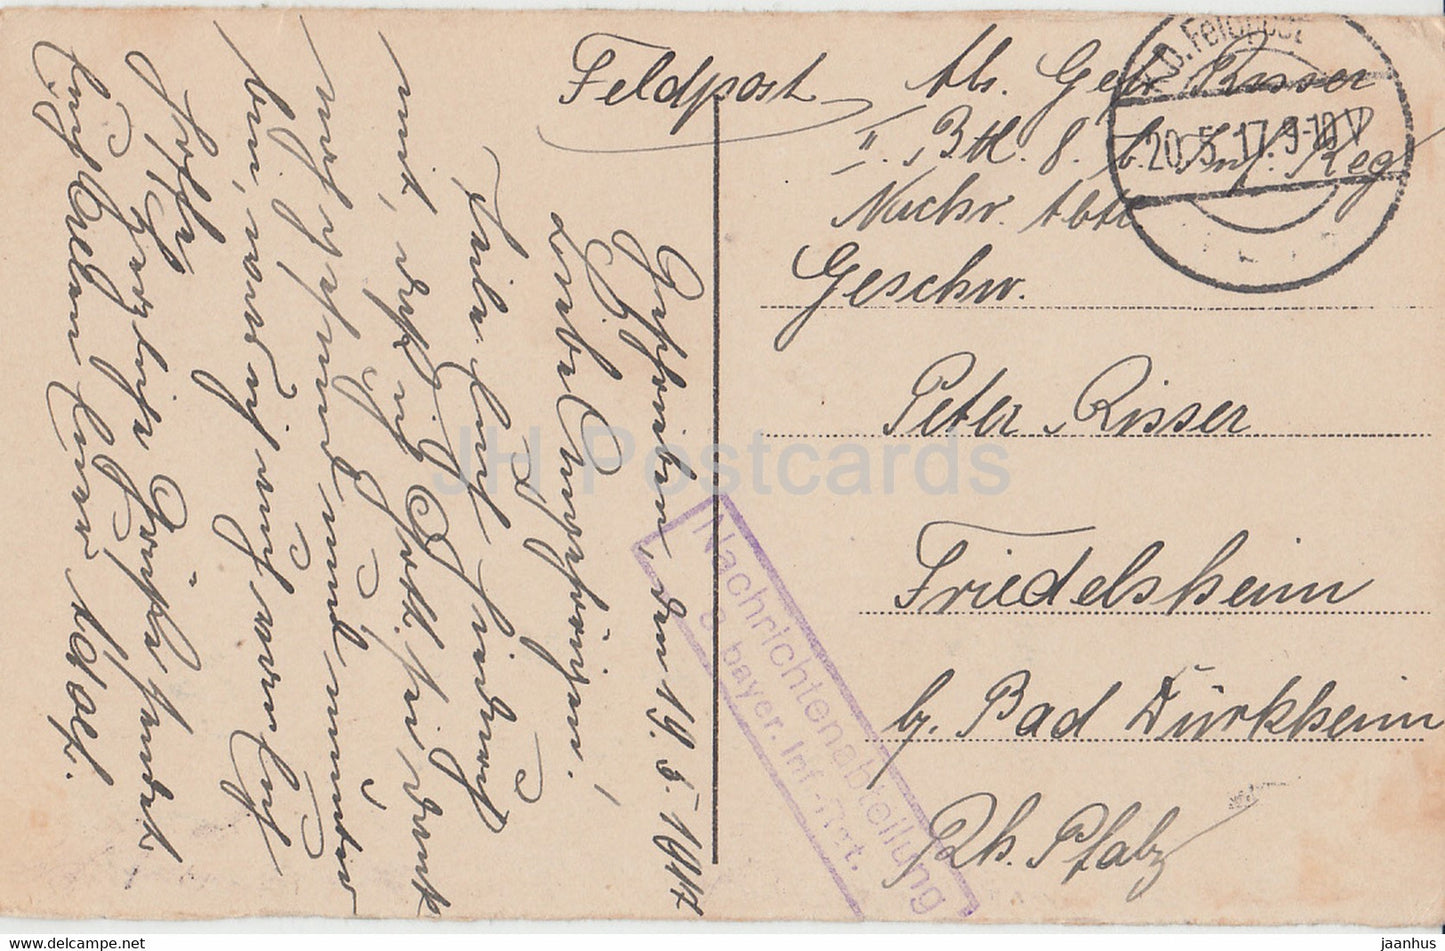 Warszawa - Ratusz - Warschau Rathaus - Feldpost - carte postale ancienne - 1917 - Pologne - utilisé